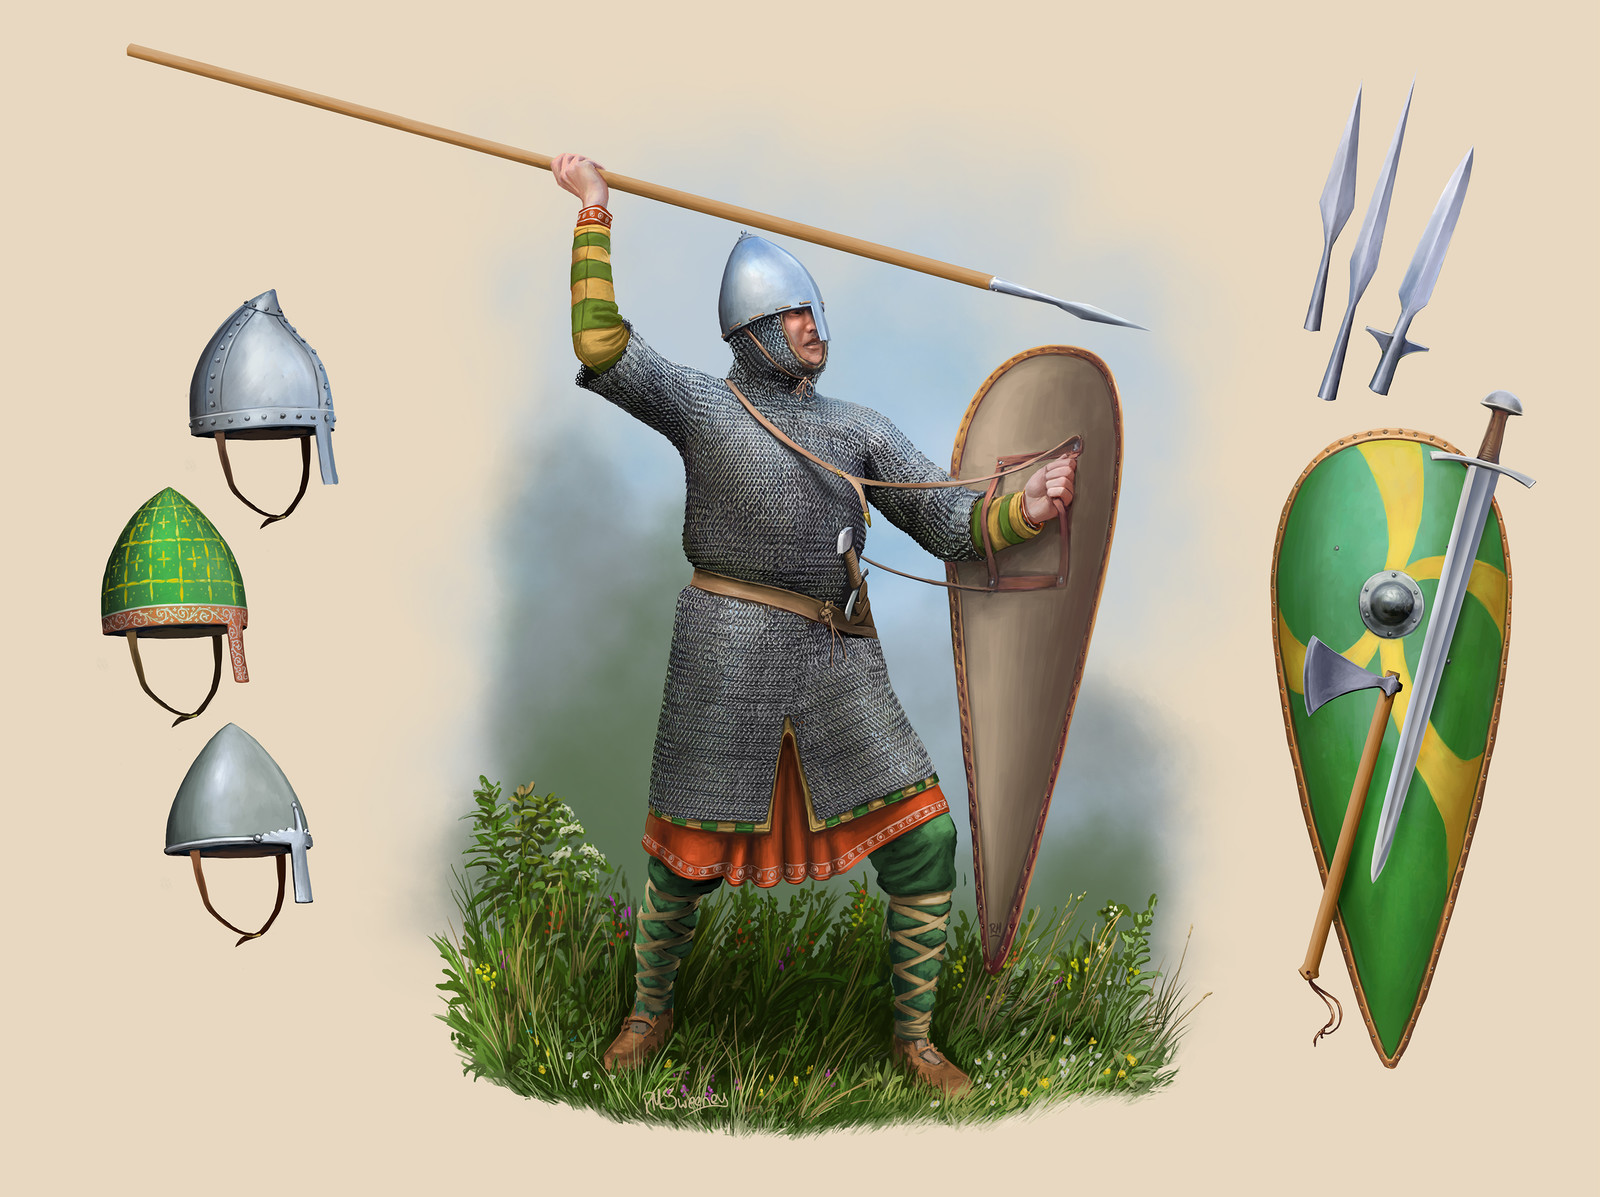 Нормандский воин 11 века